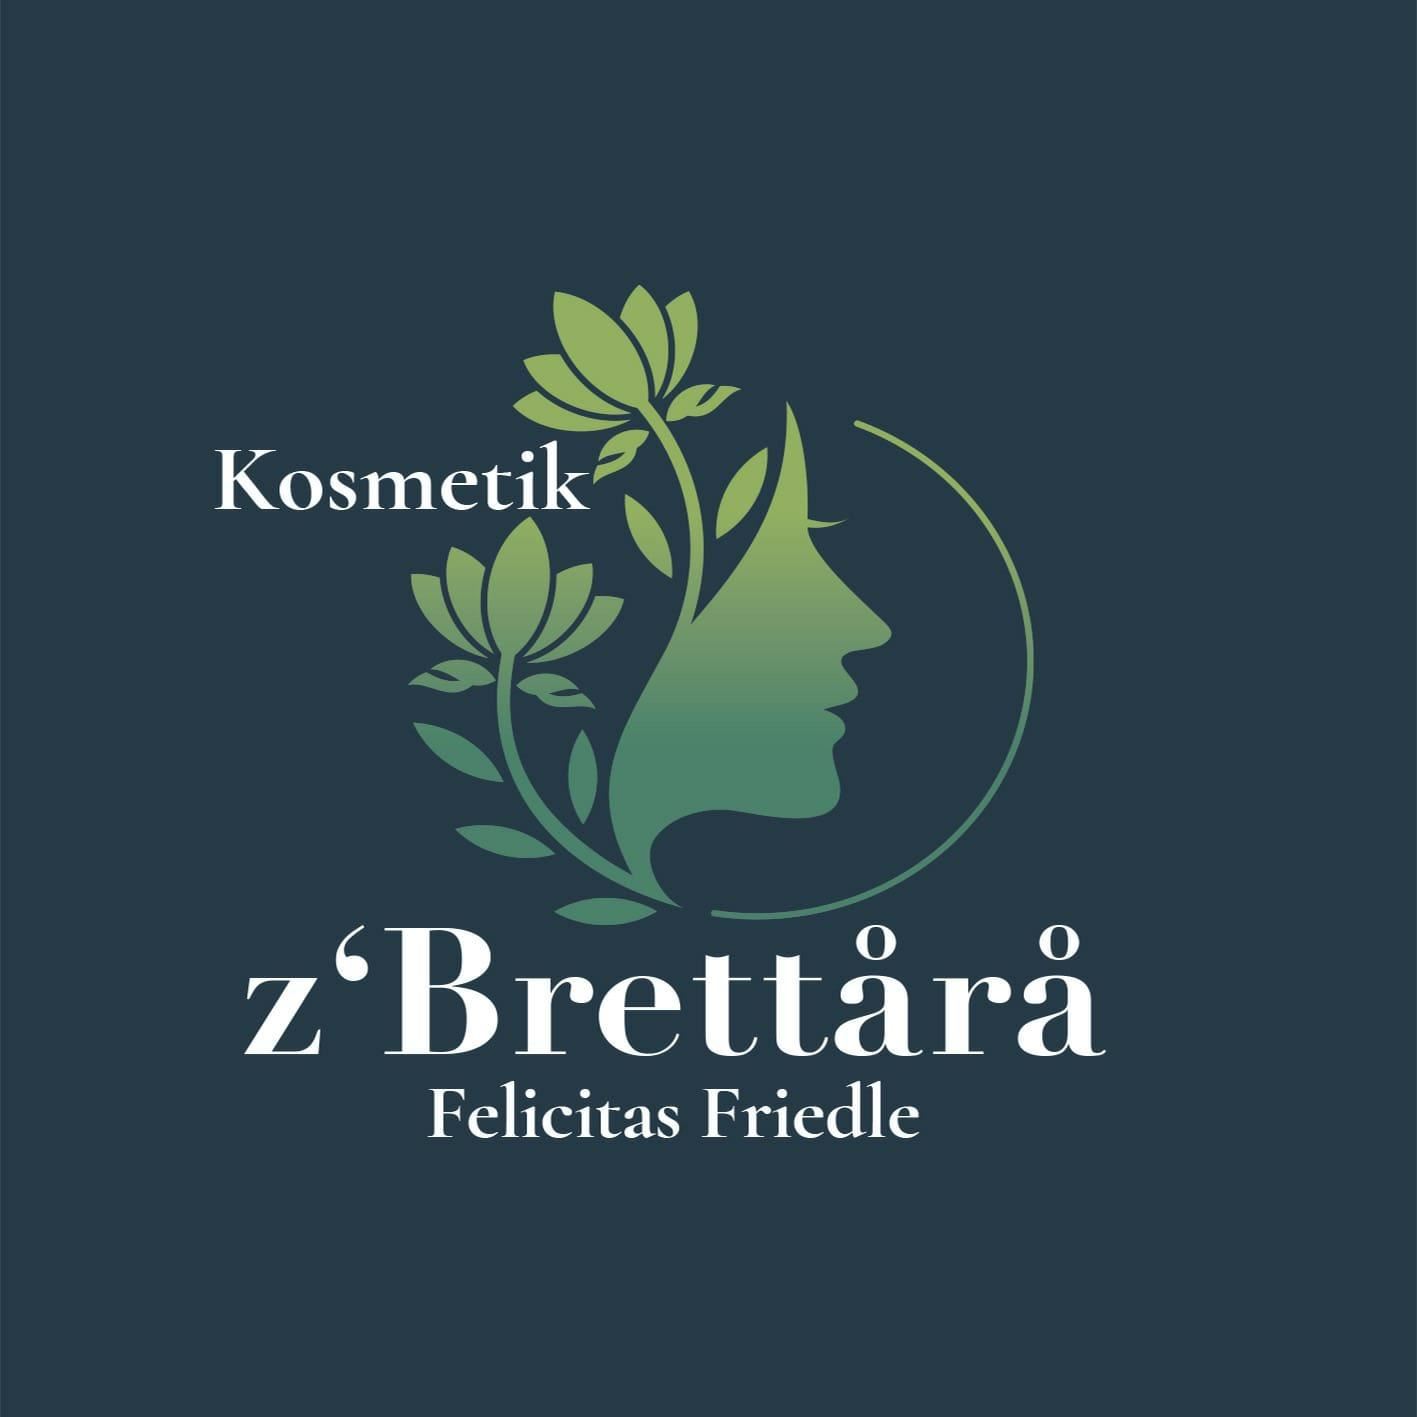 Kosmetik z'Brettara Logo